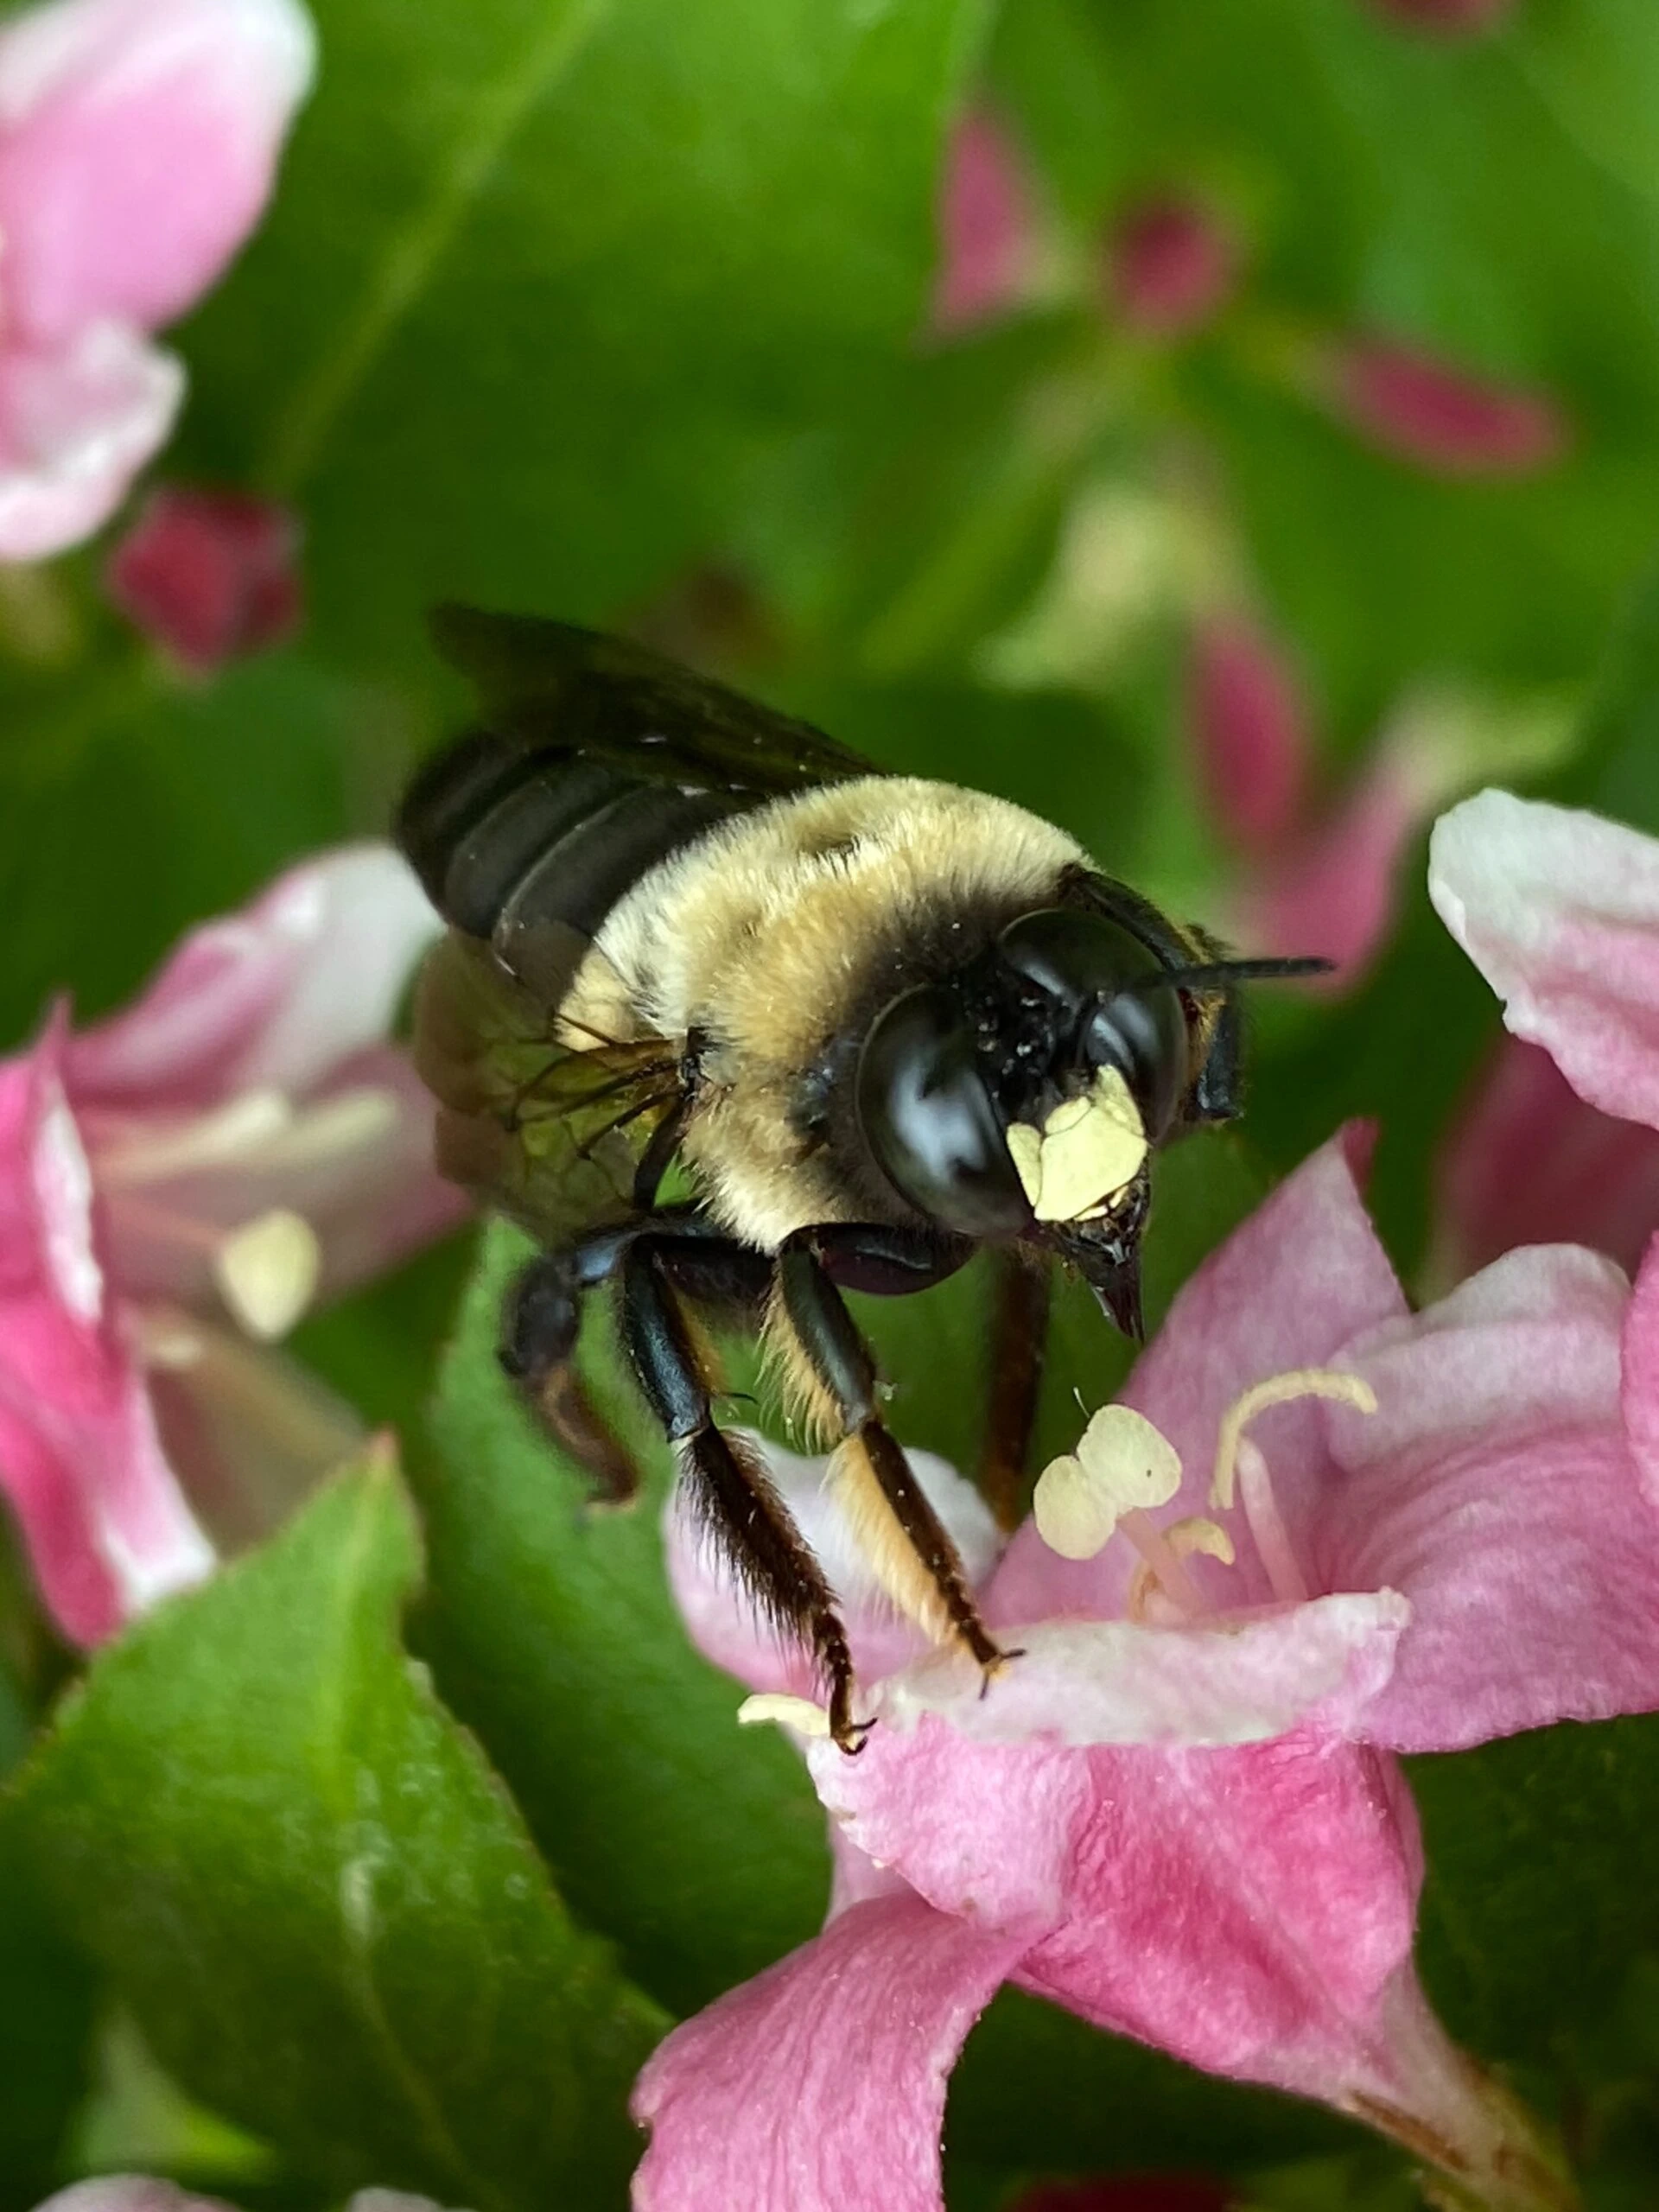 jaime-smith-Honey Bee on flower collecting nectar from stamen-unsplash